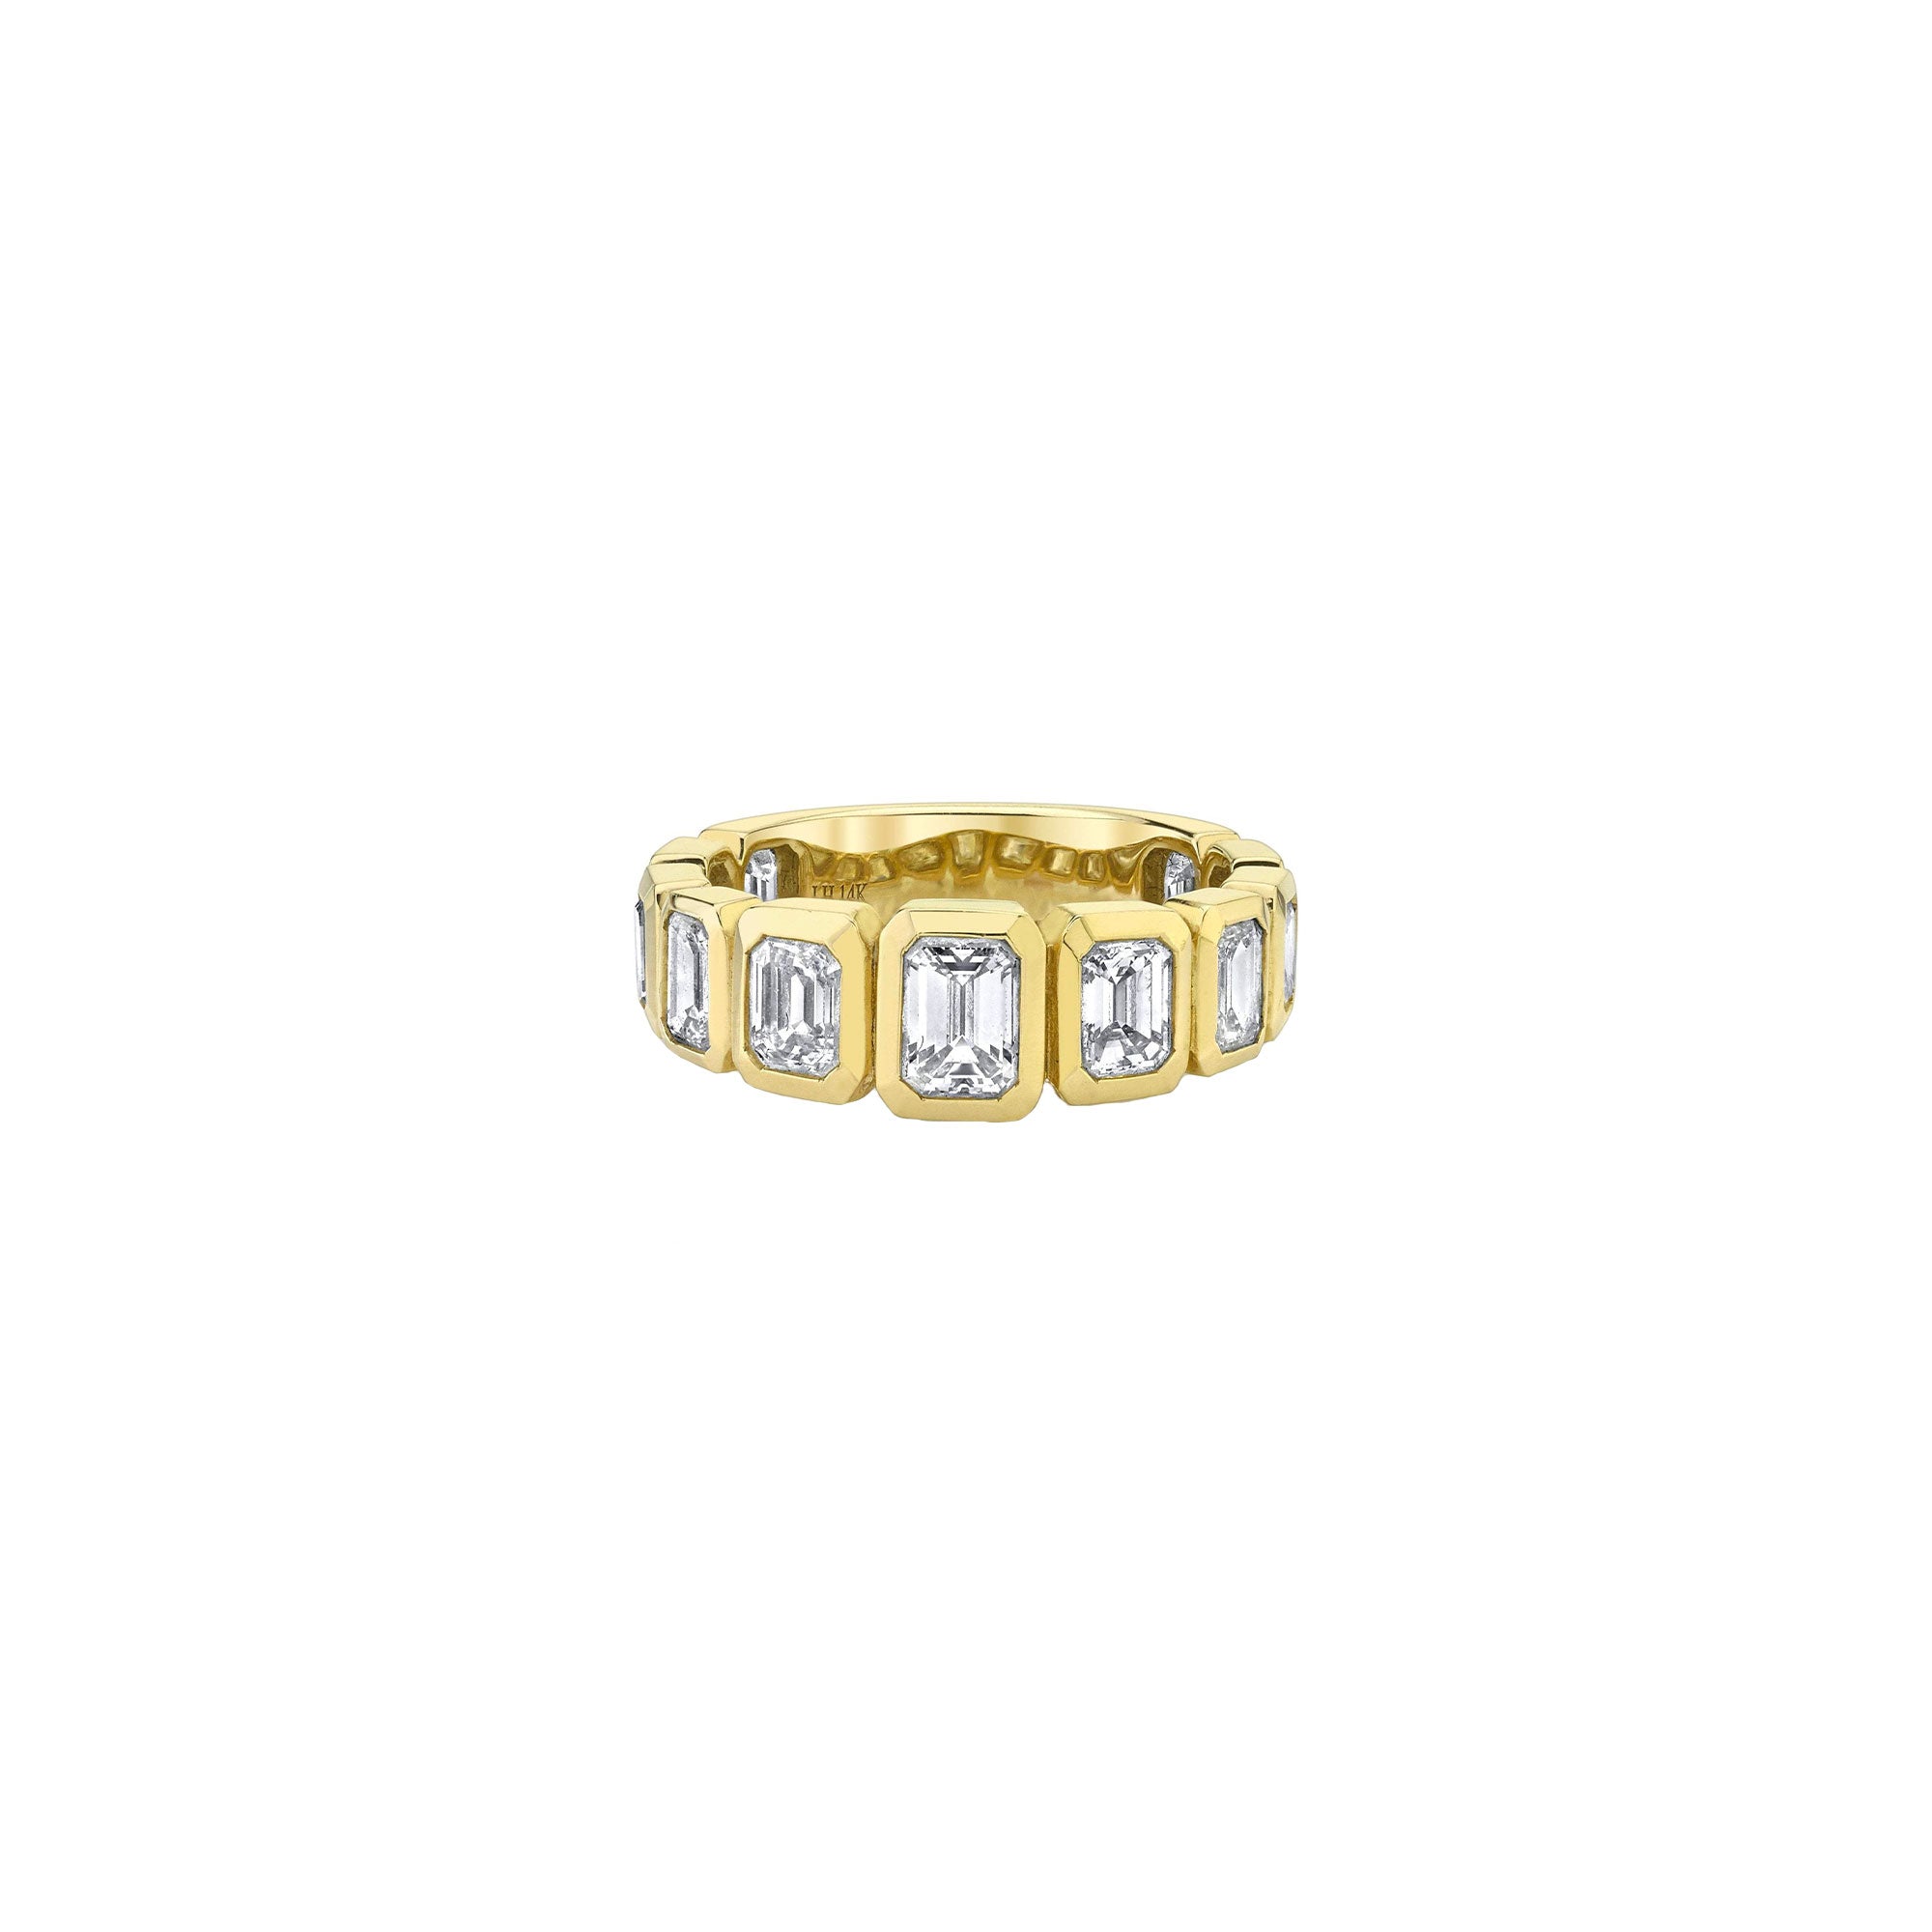 Graduated Emerald Cut Diamond Ring